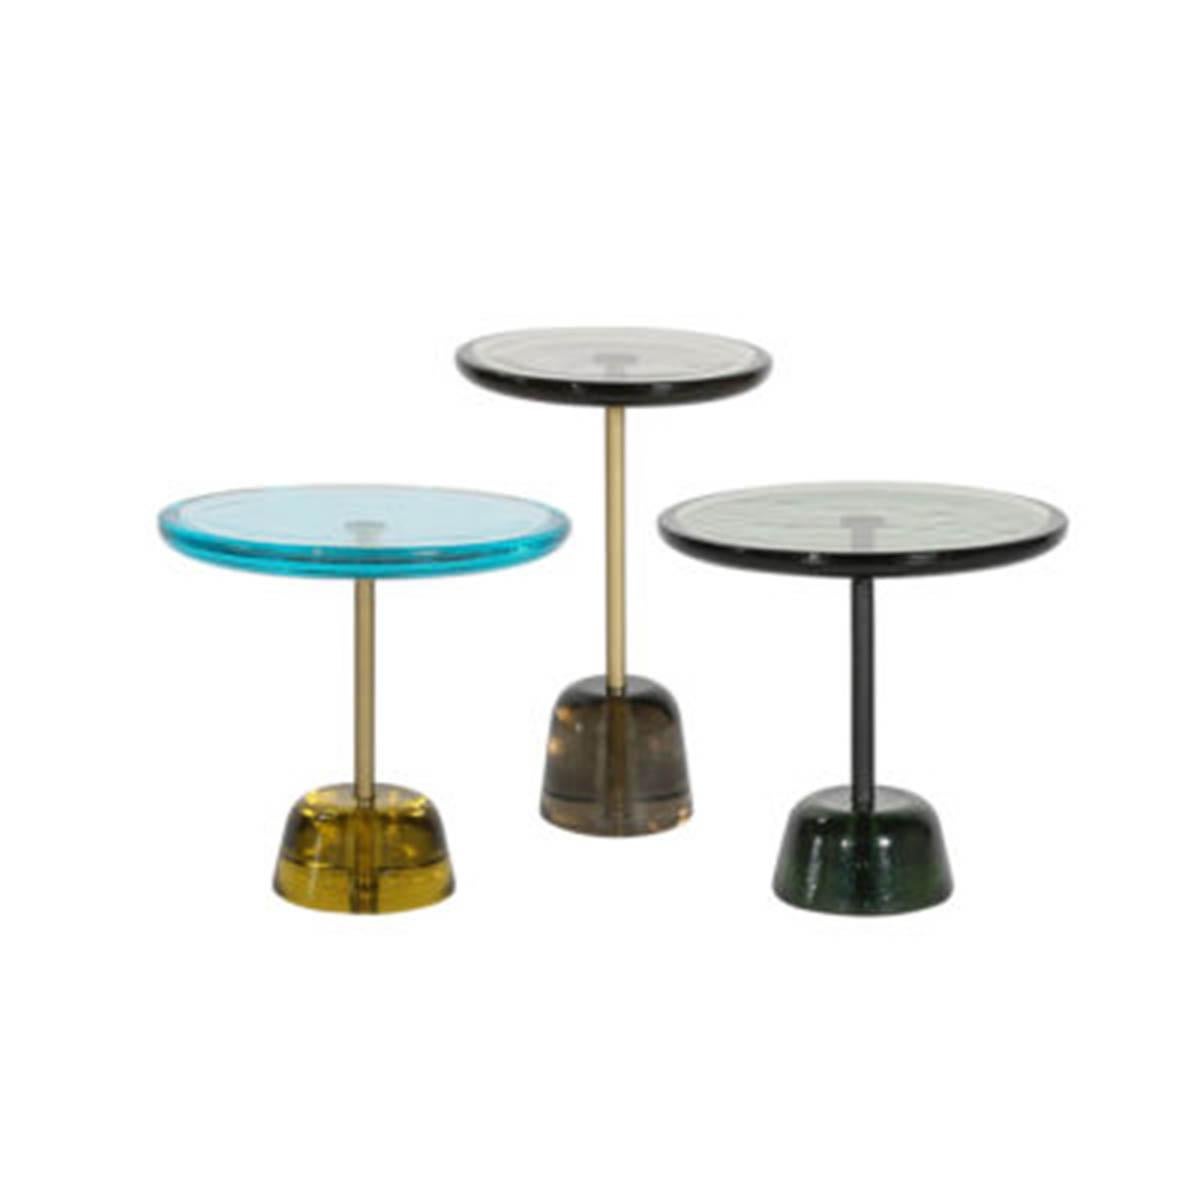 German Pina Low Side Table in Glass & Steel, Green/Black, by Sebastian Herkner for Pulpo